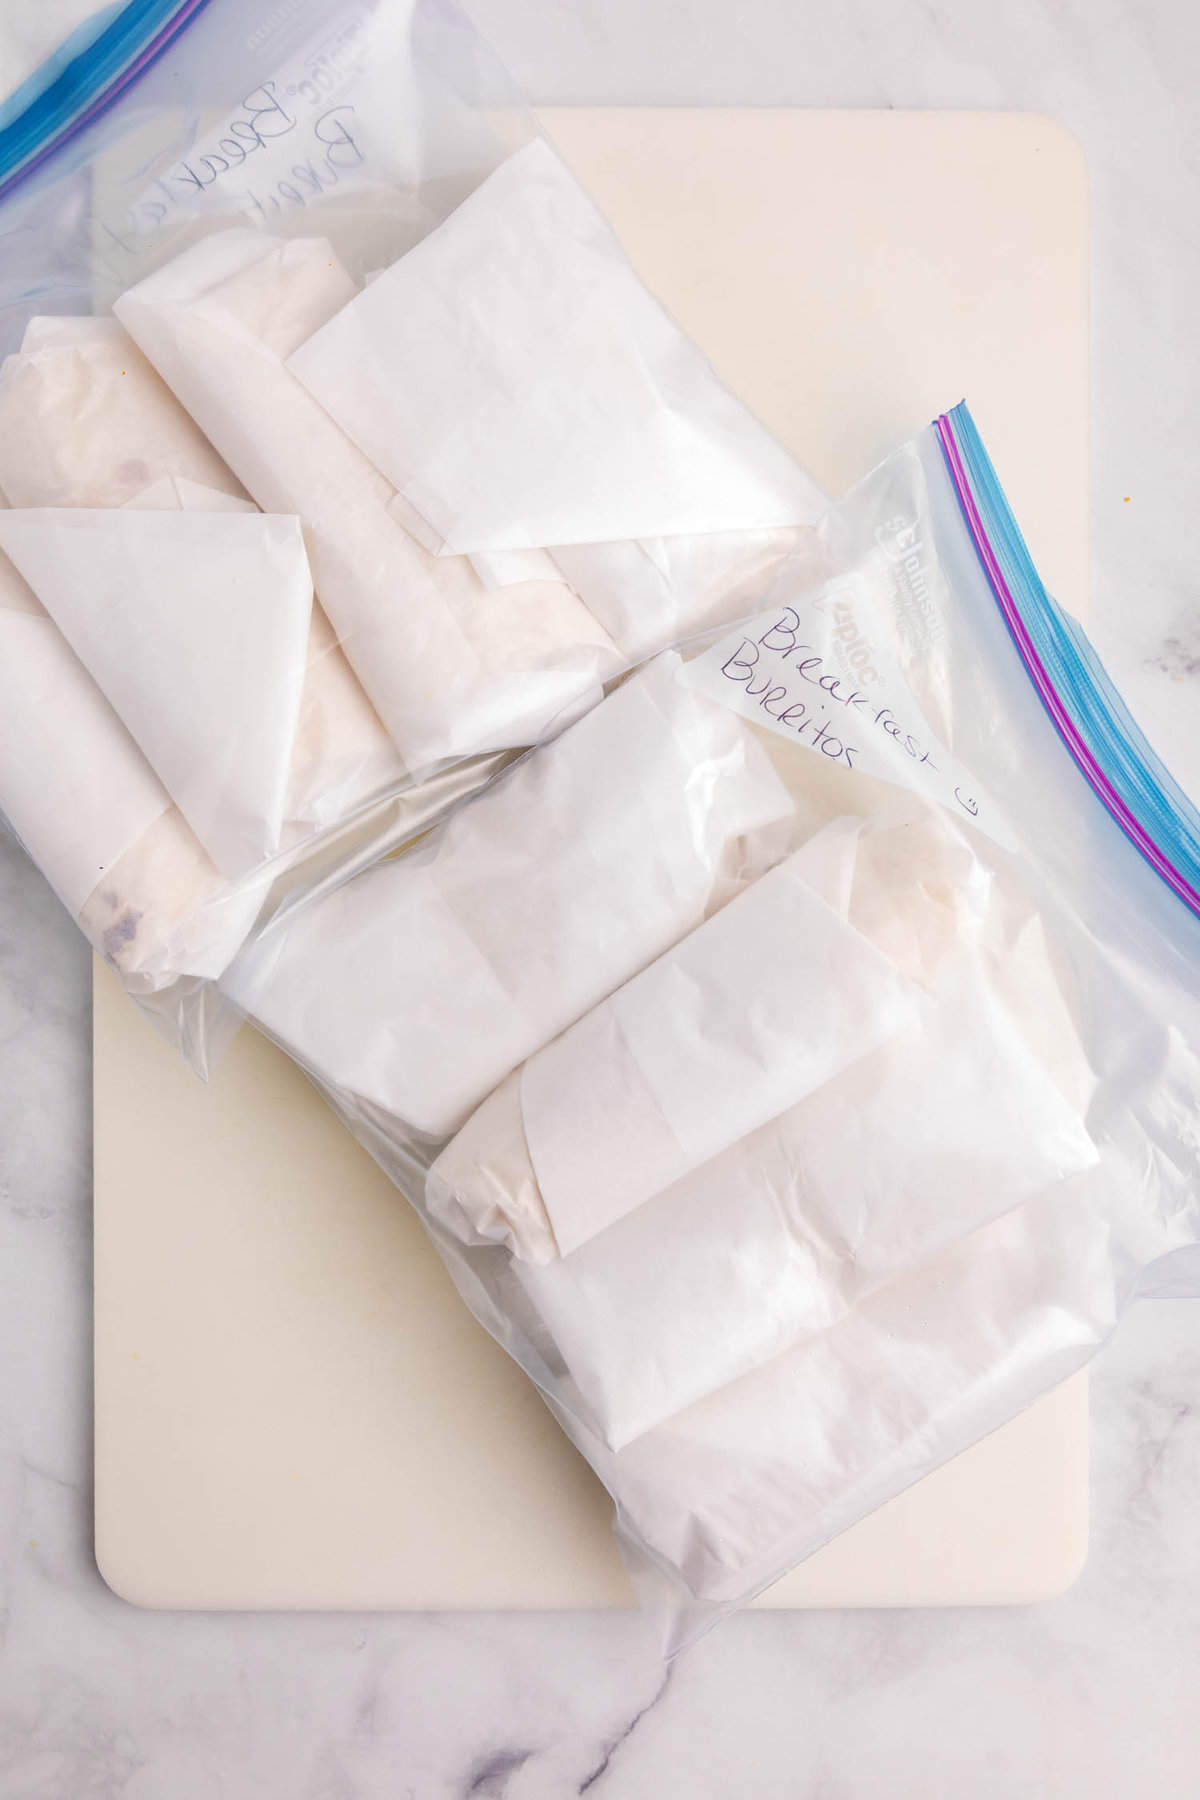 Reusable plastic bag with freezer breakfast burritos